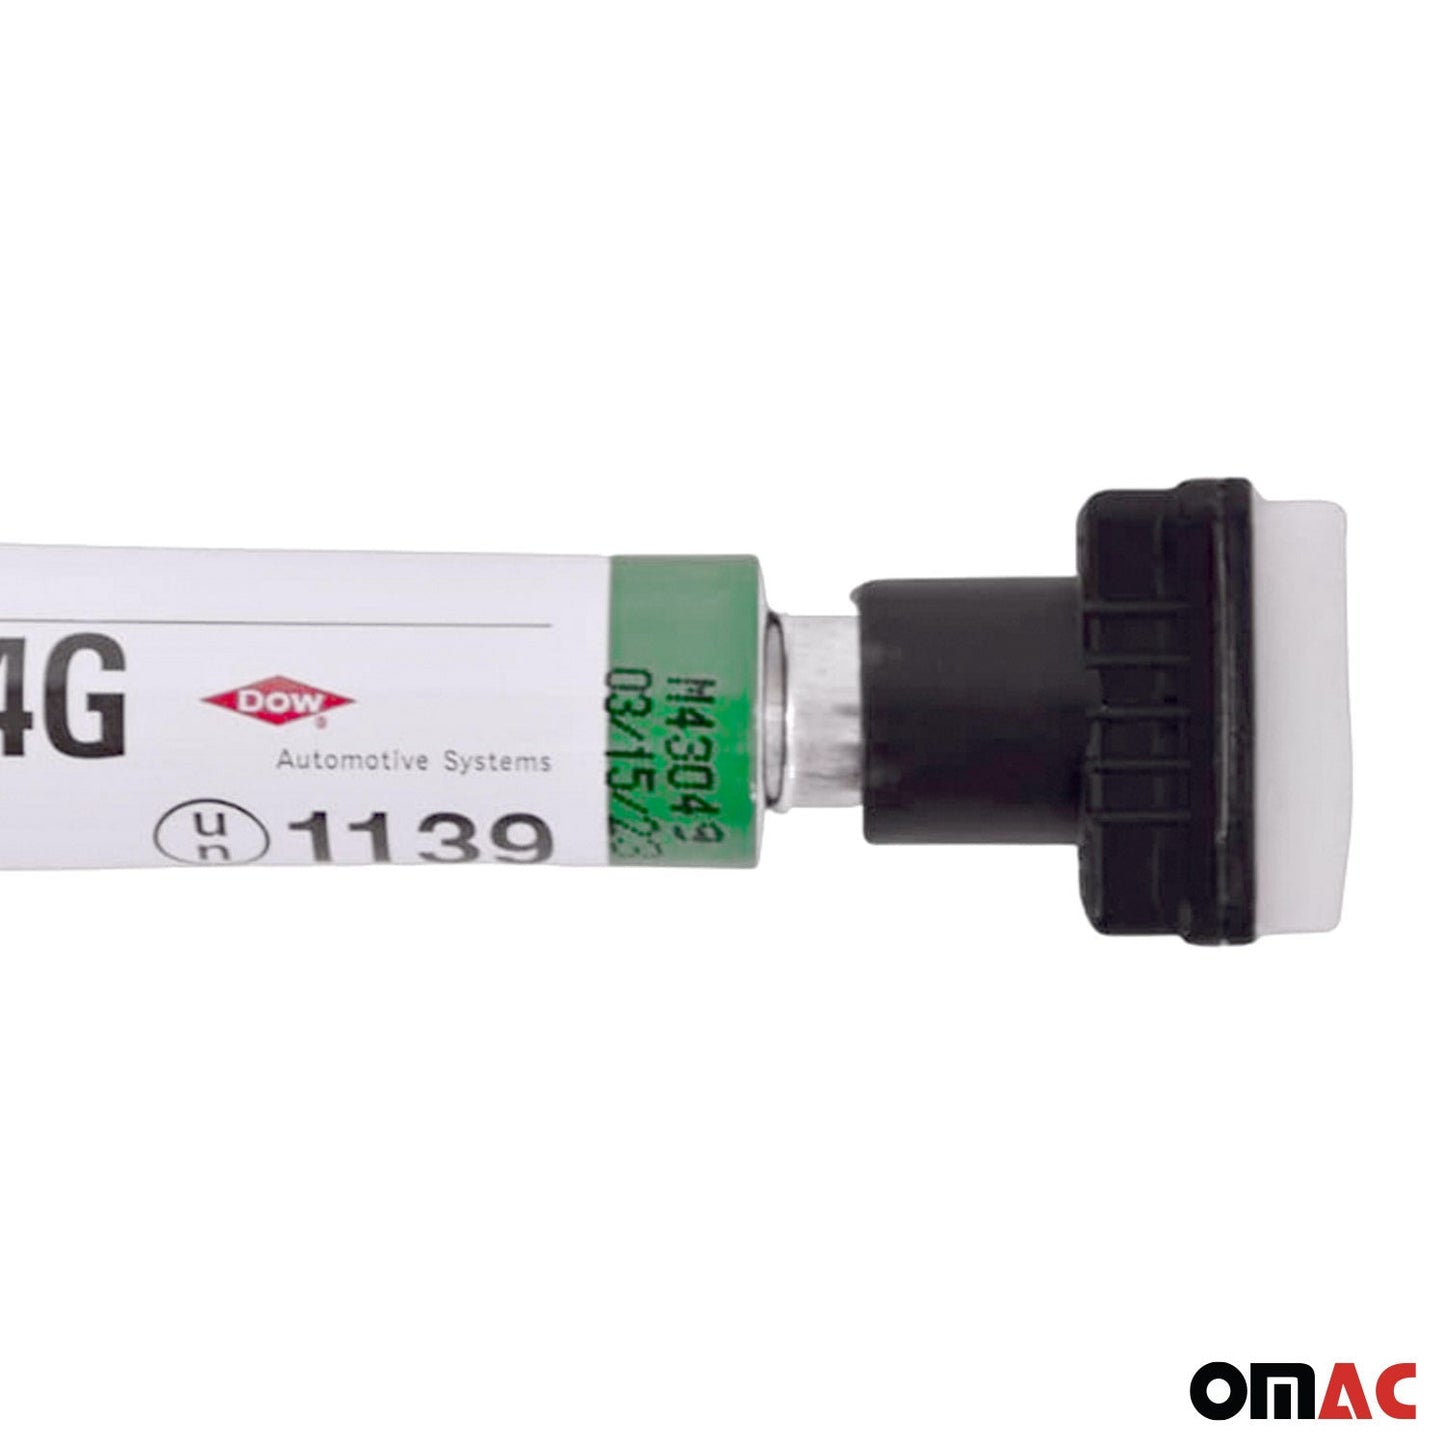 OMAC 2x Auto Glass Sealant Windshield Glue Sika P2G Adhesive + Glass Primer 96SKP2G-5504G-SET2